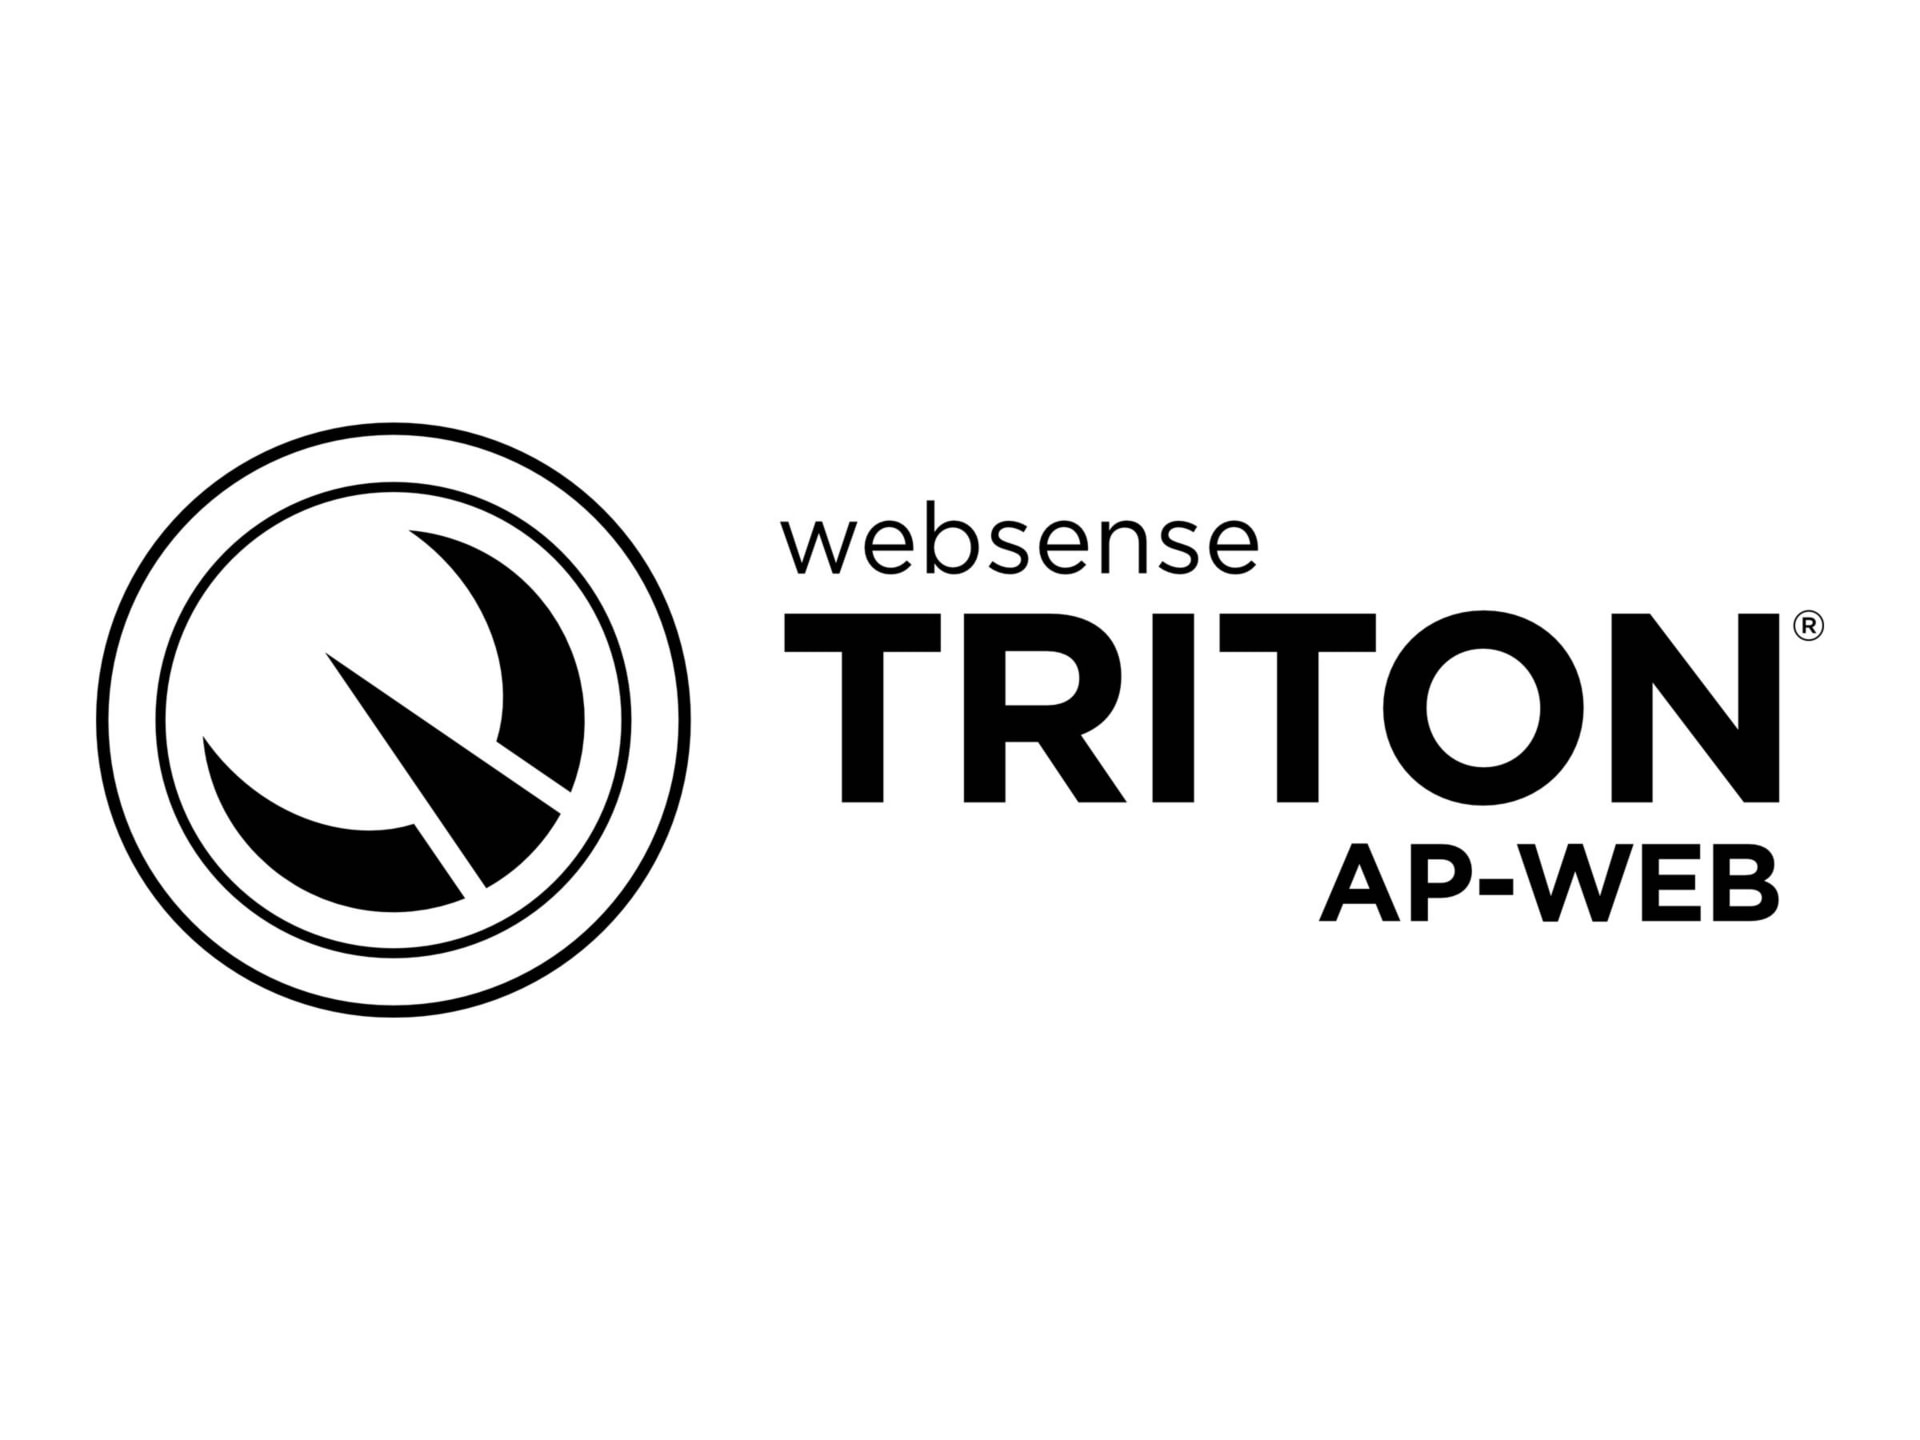 TRITON AP-WEB - subscription license (17 months) - 1 additional user